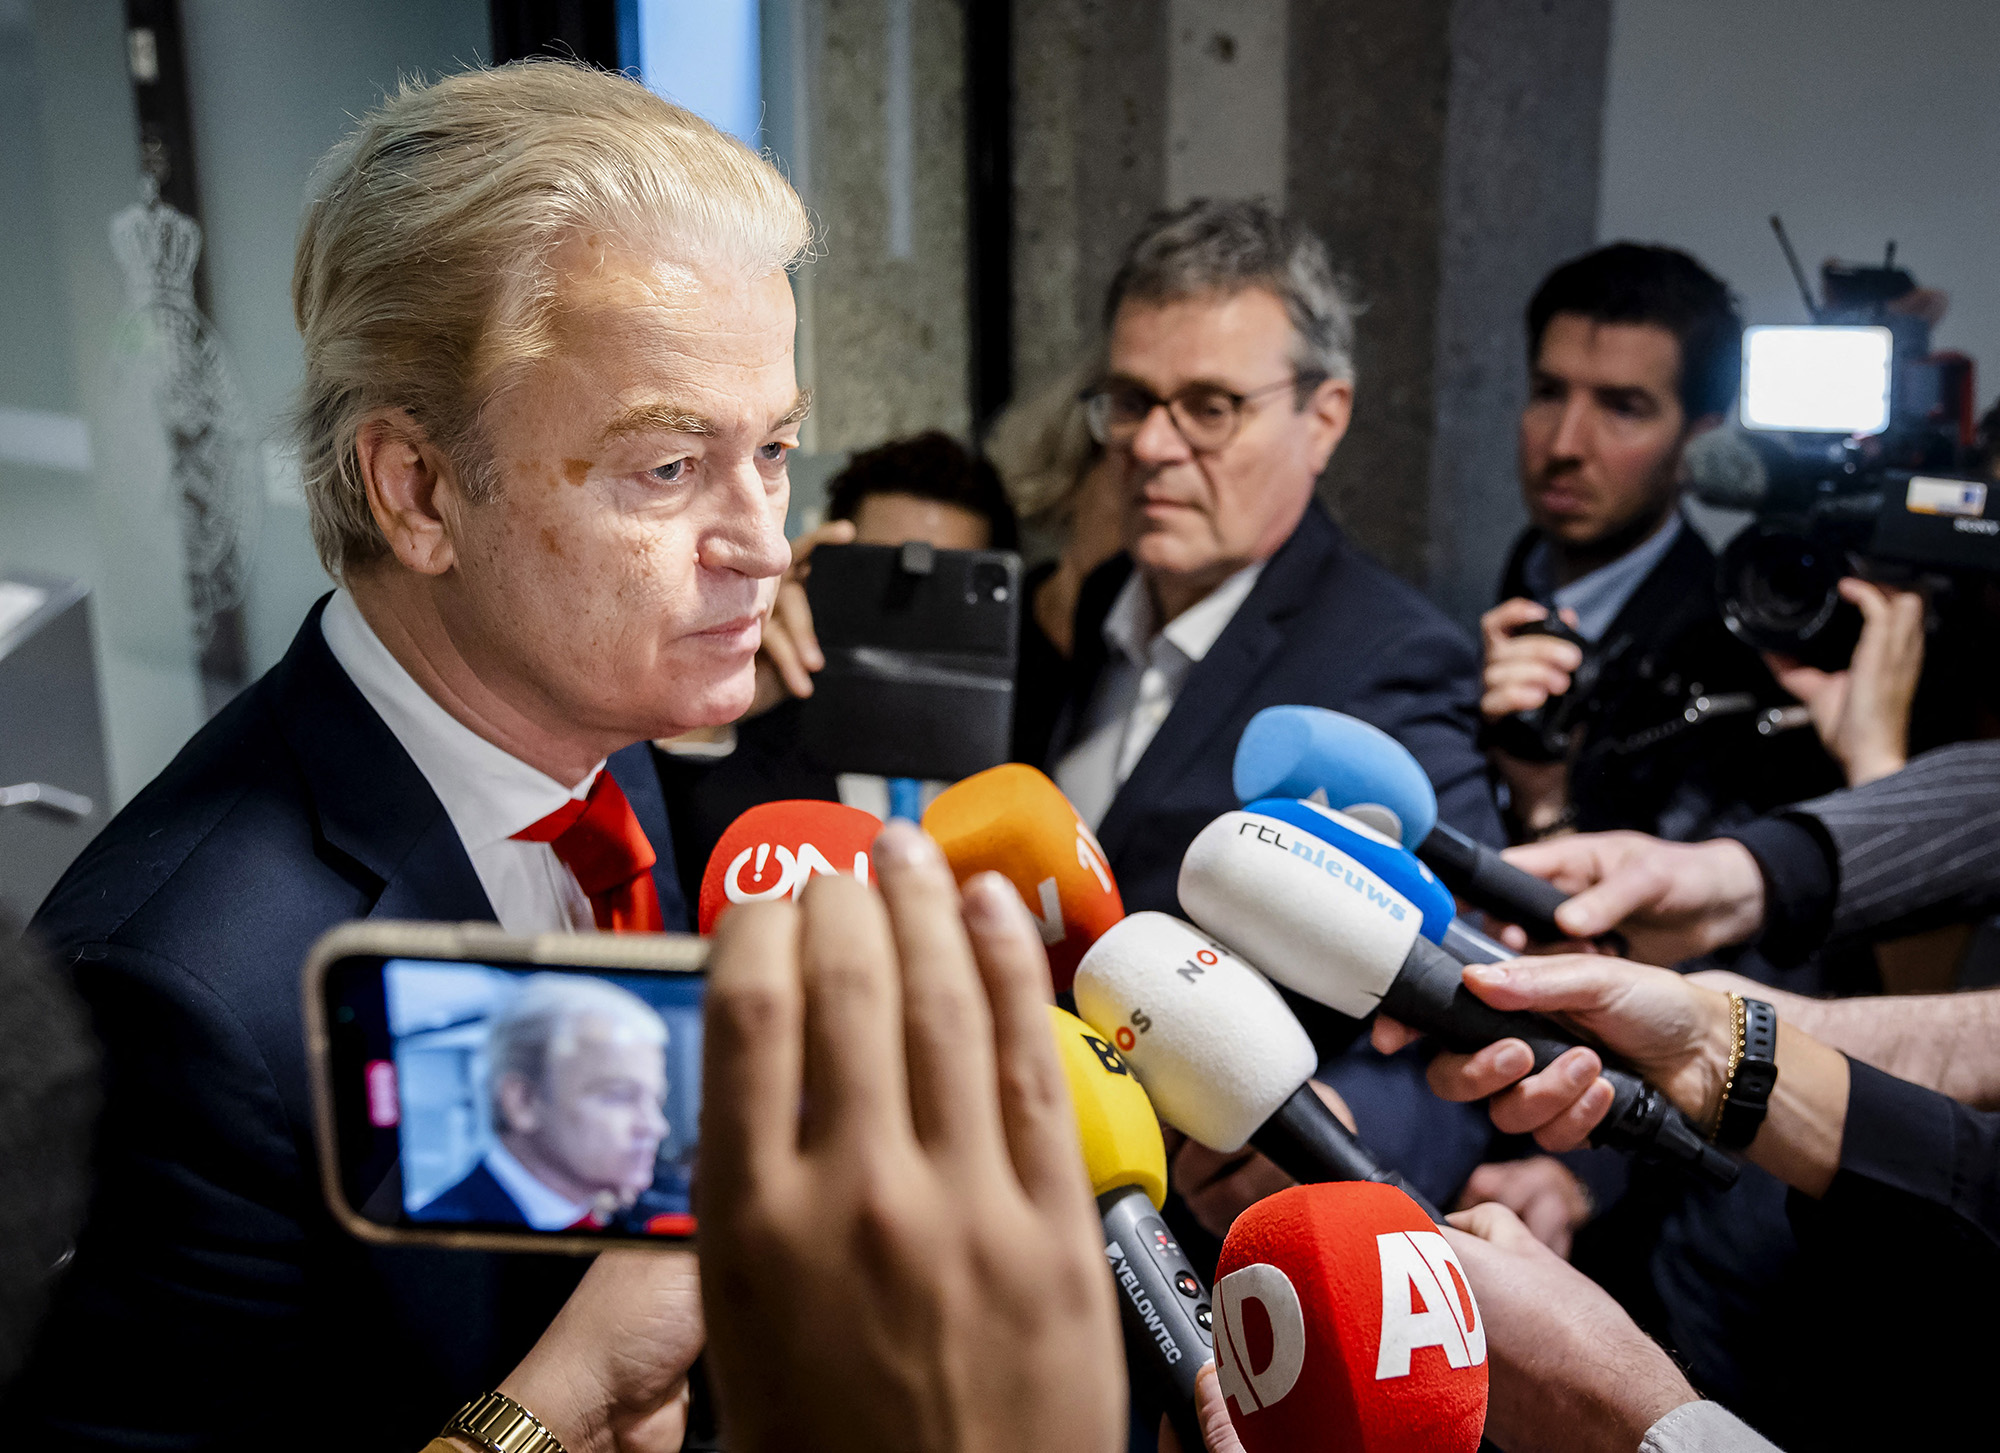 Geert Wilders am Mittwoch in Den Haag (Bild: Sem van der Wal/ANP/AFP)